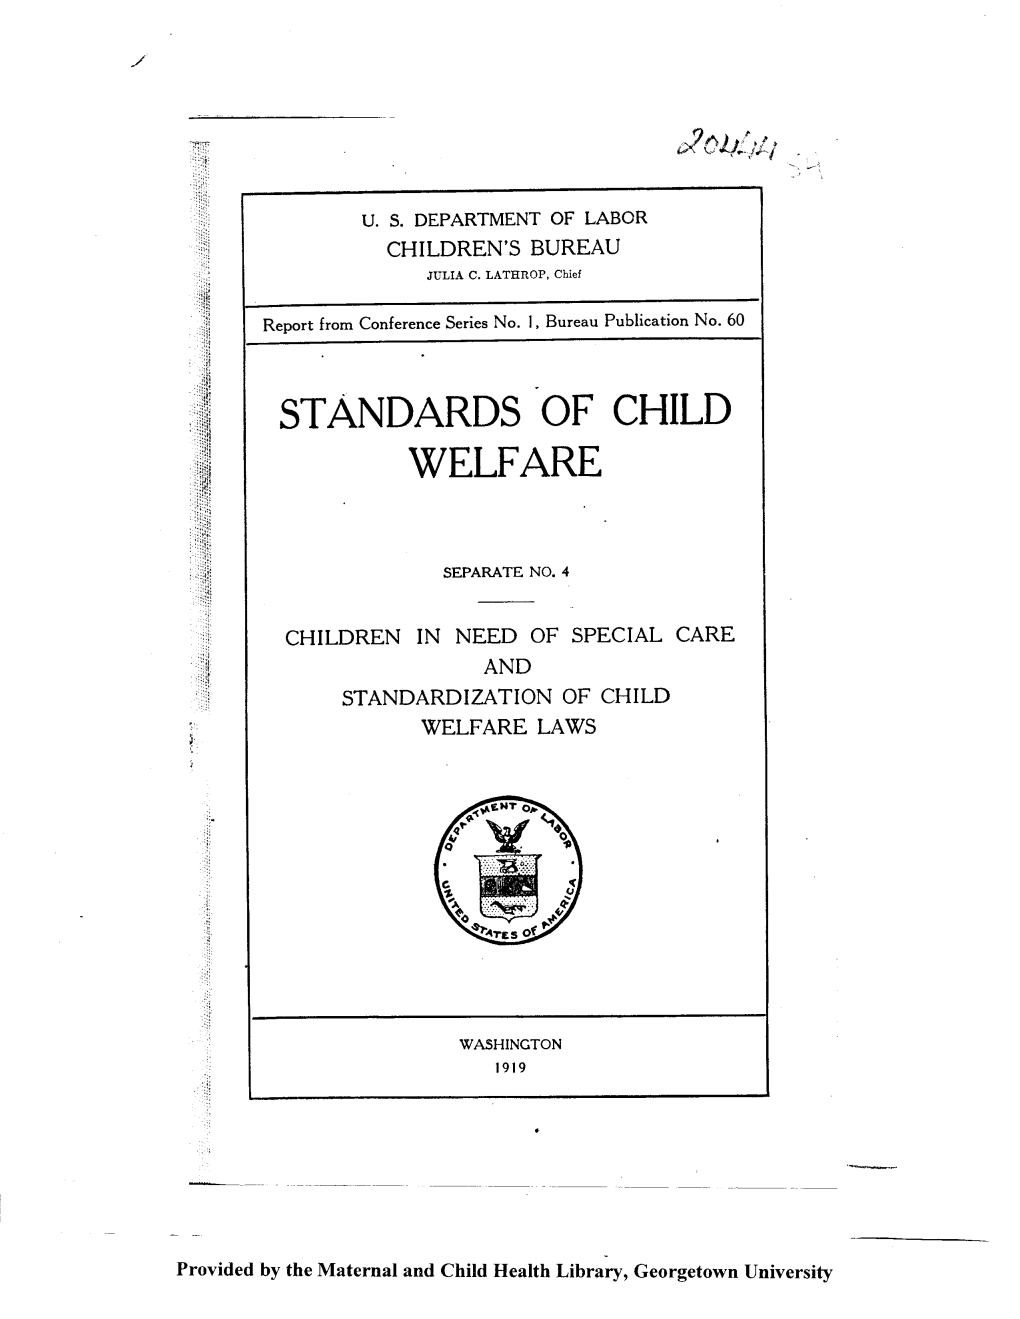 Standards of Child Welfare